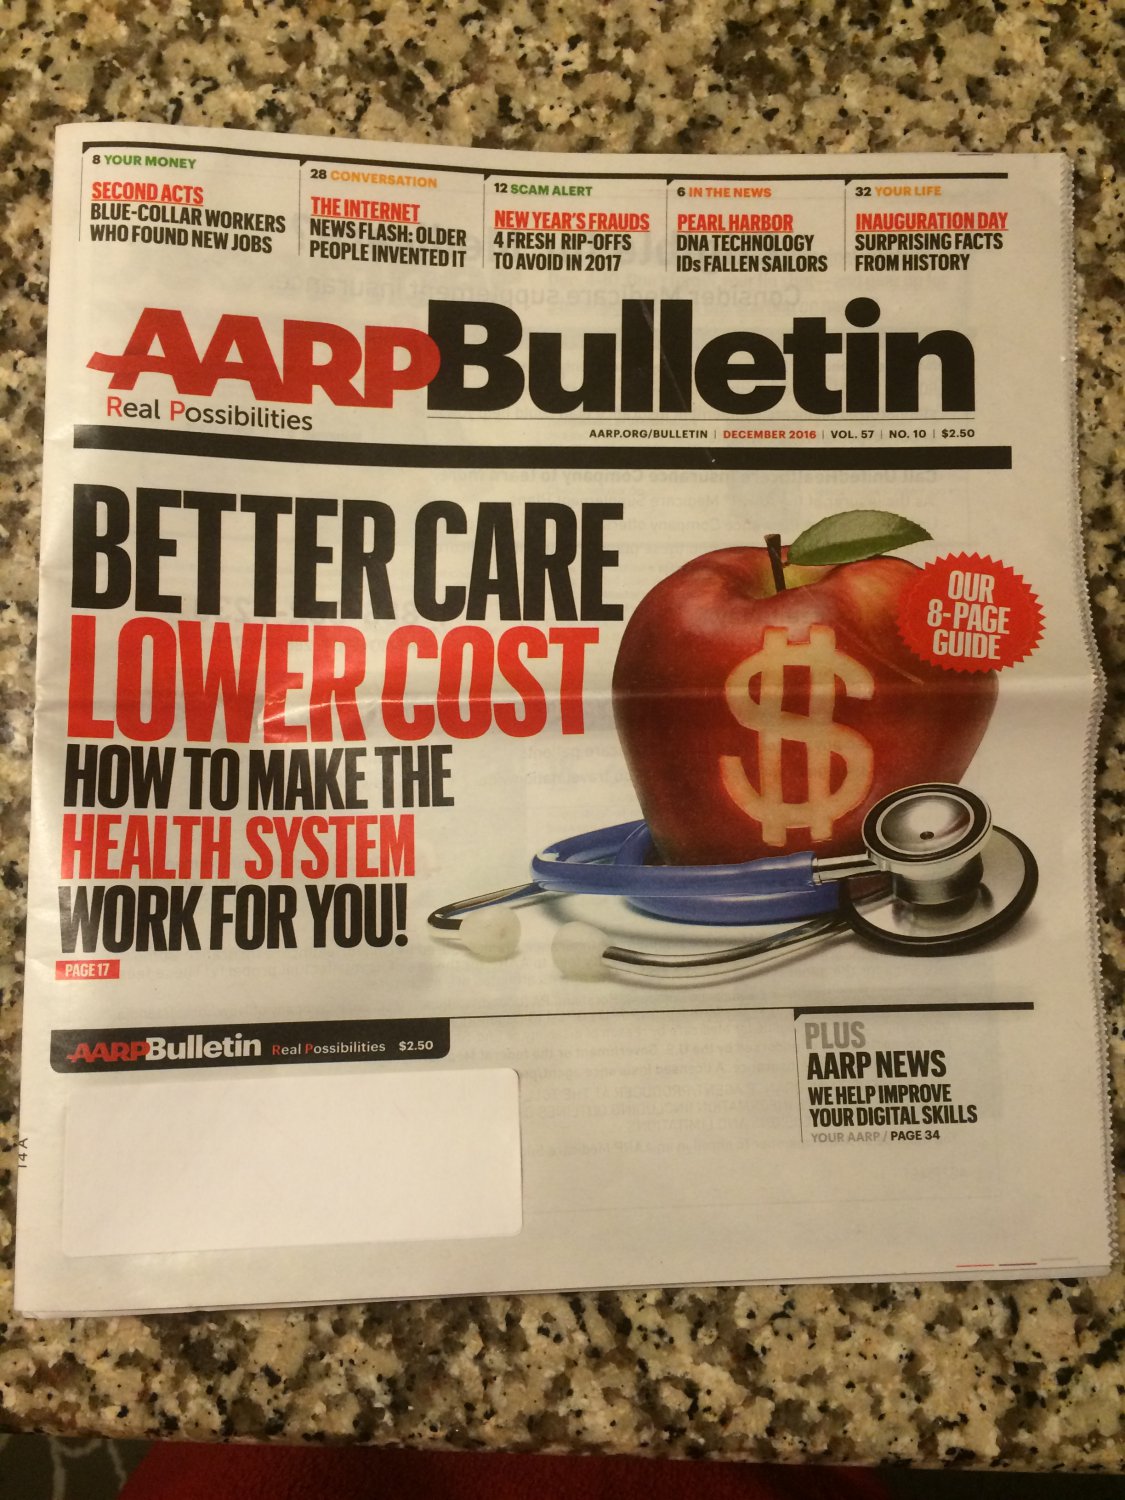 Aarp Bulletin December 2016 Vol 57 No 10 Better Care Lower Cost